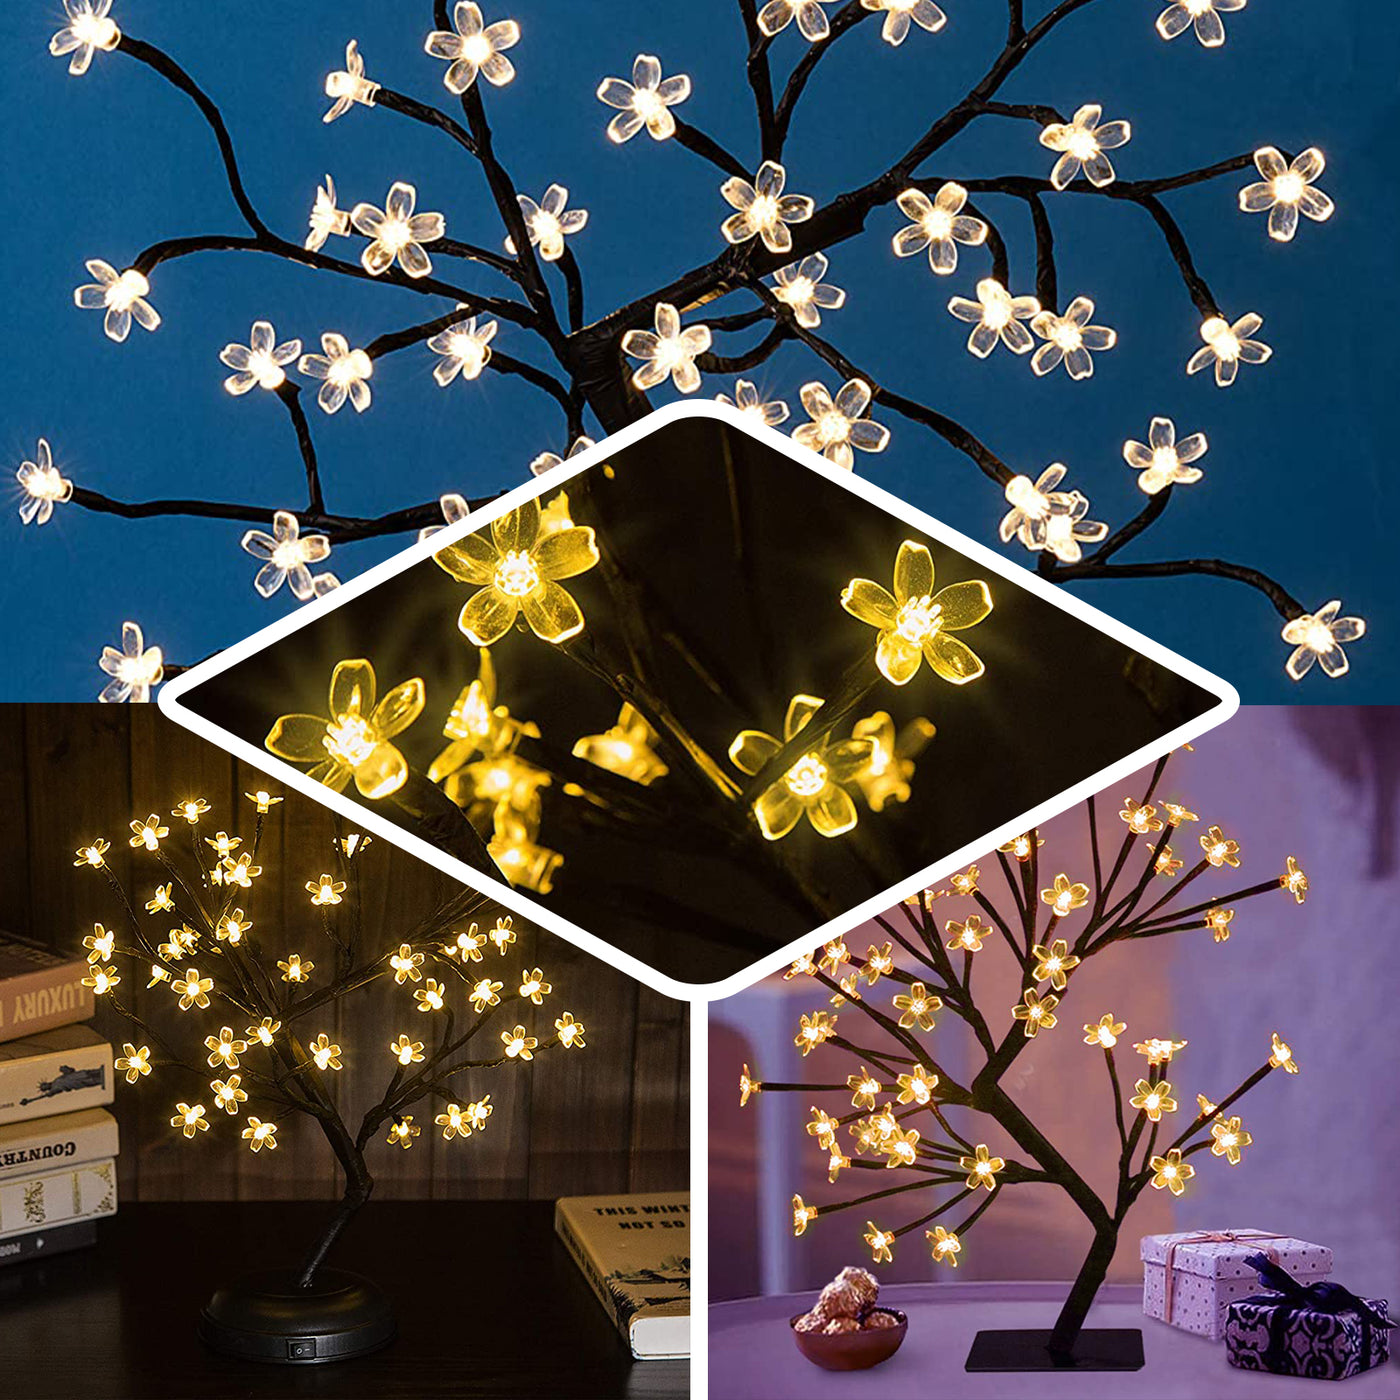 2 Warm White LED Tree Centerpieces | eFavormart